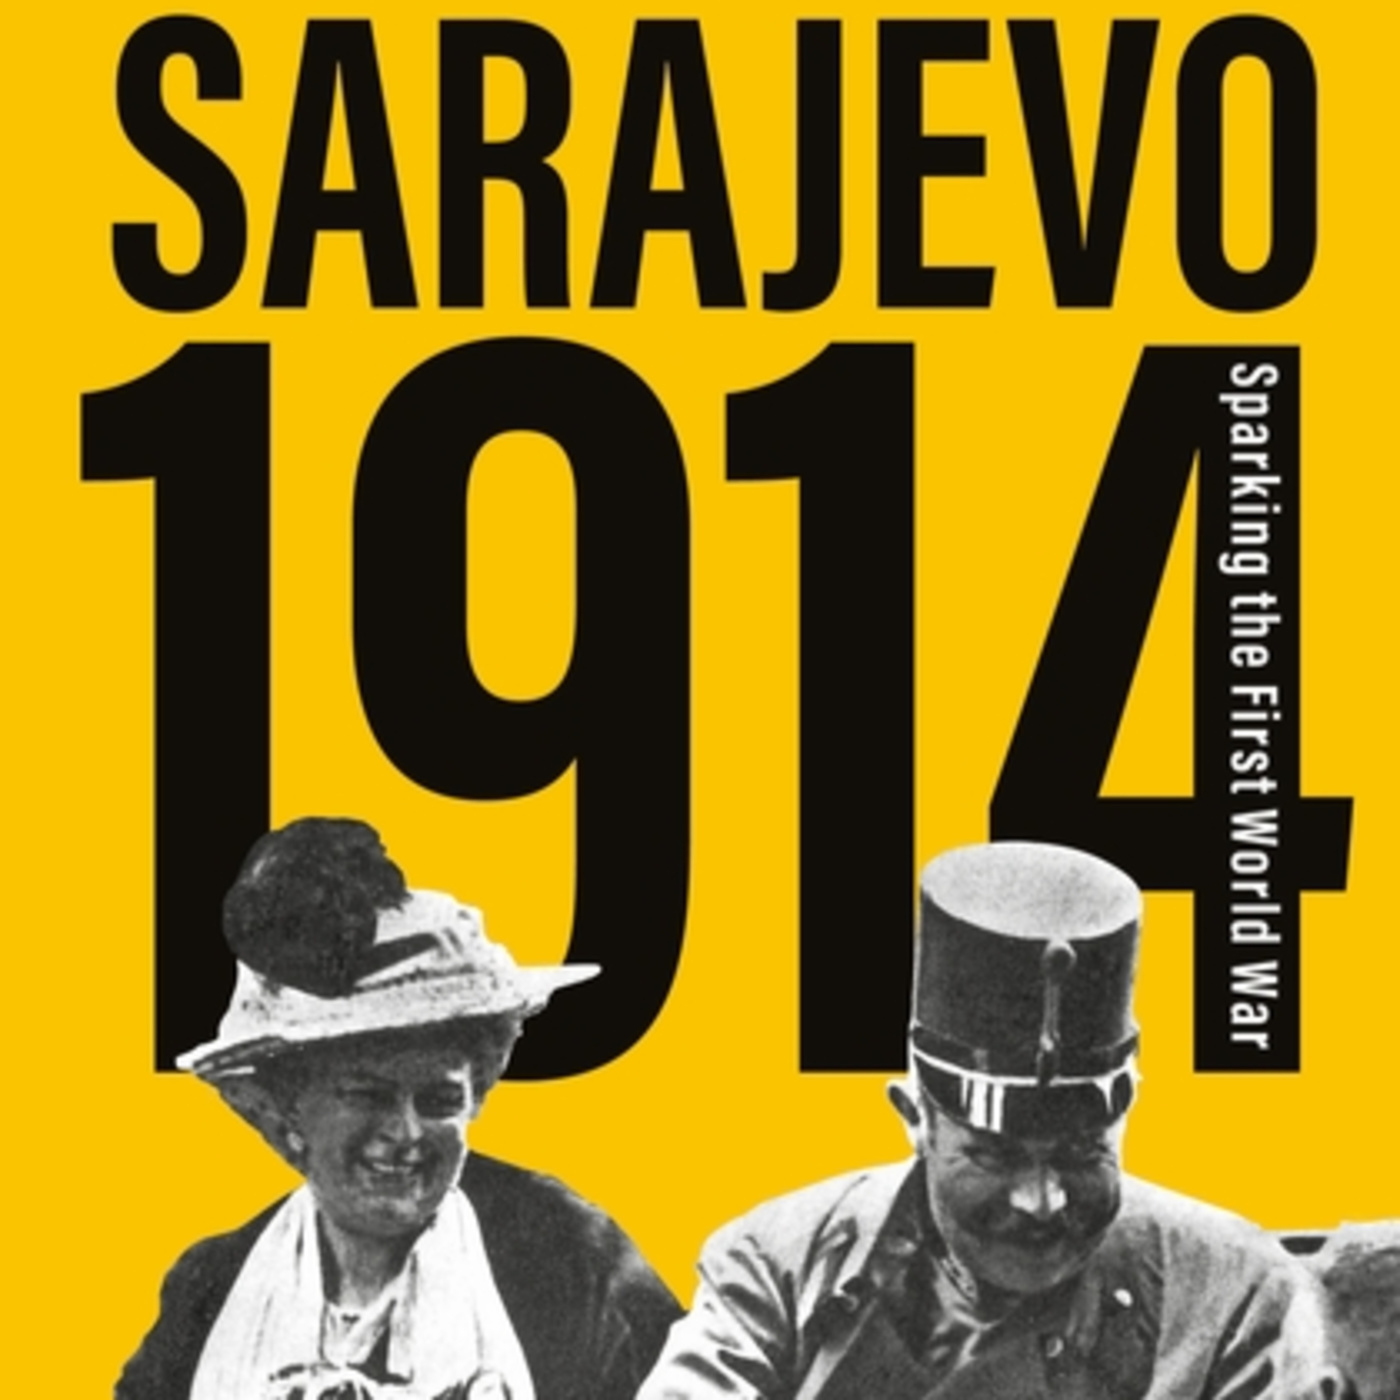 S E42: TGW042 - Mark Cornwall on Sarajevo 1914 Sparking the First World War